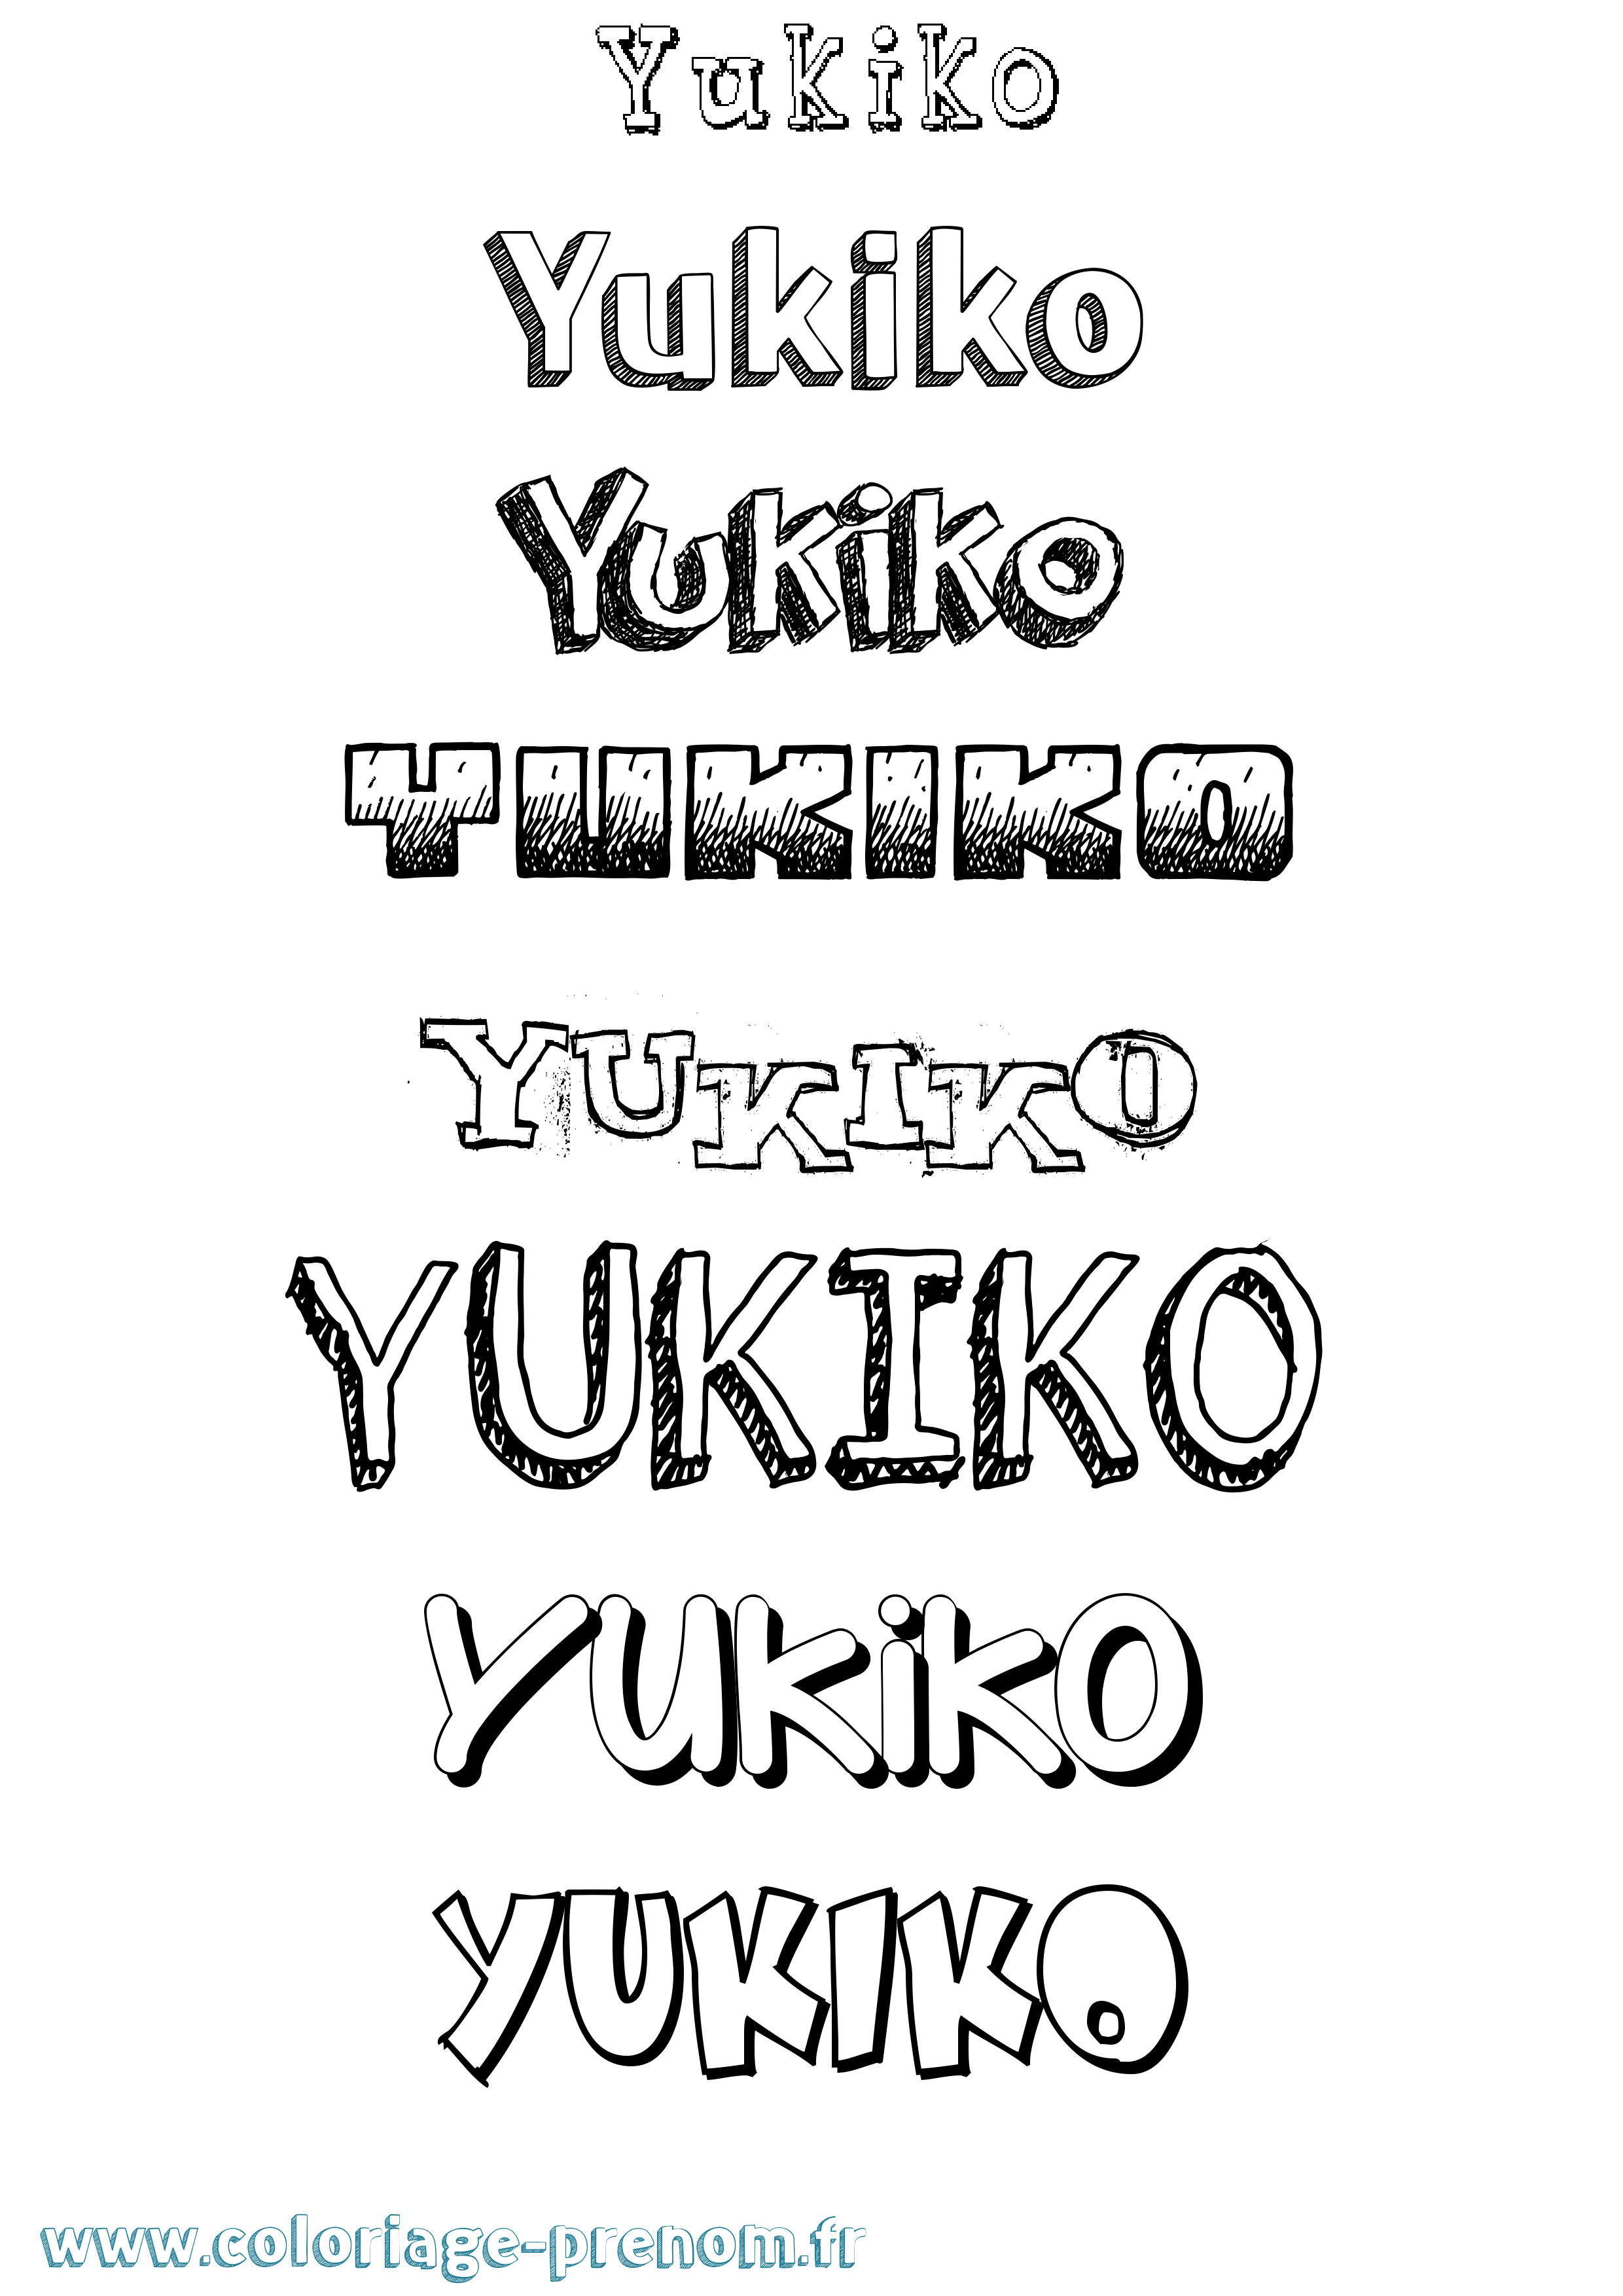 Coloriage prénom Yukiko Dessiné